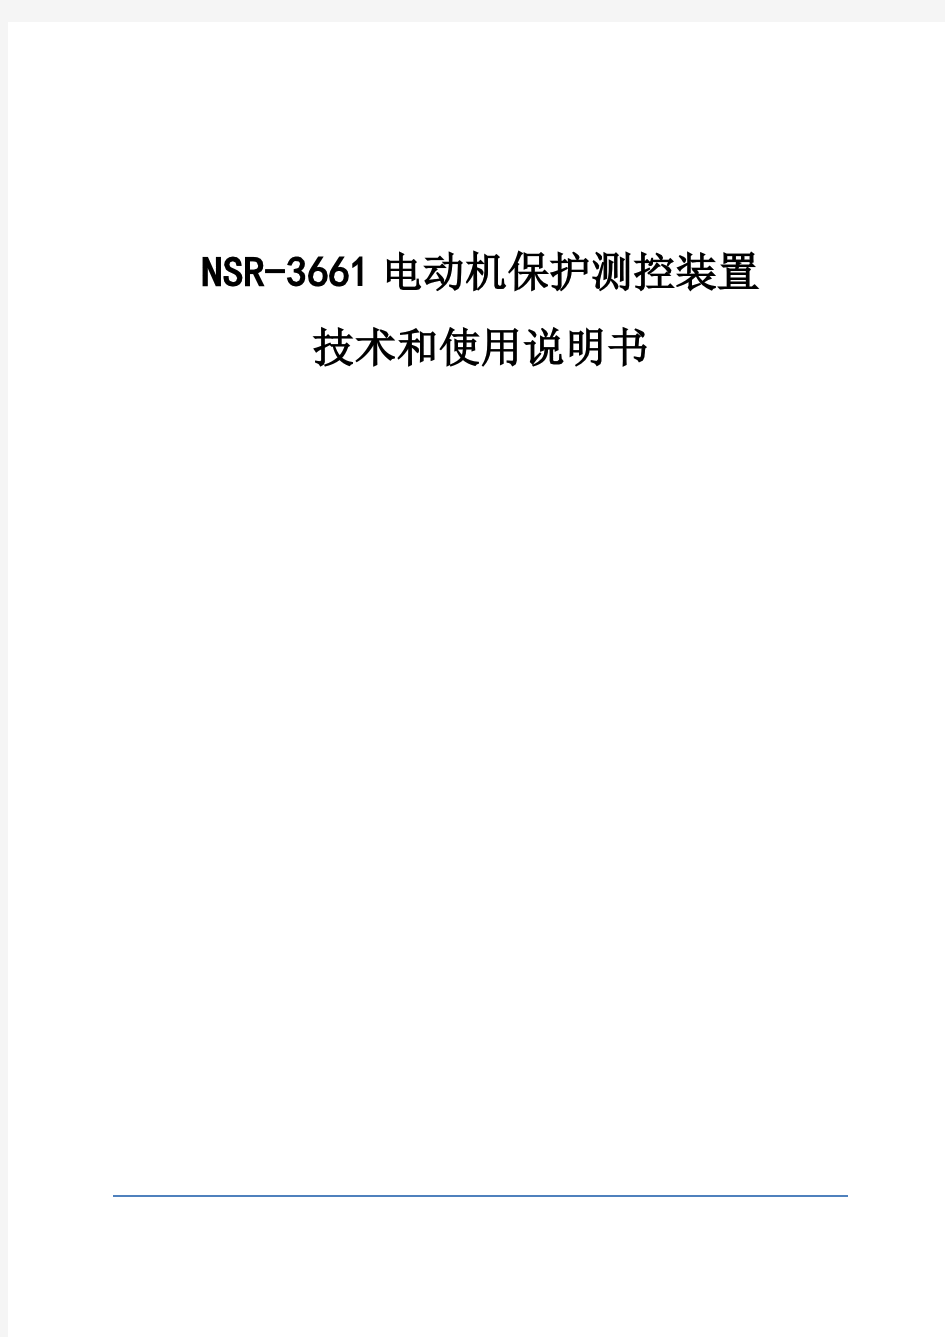 NSR-3661电动机保护测控装置技术和使用说明书